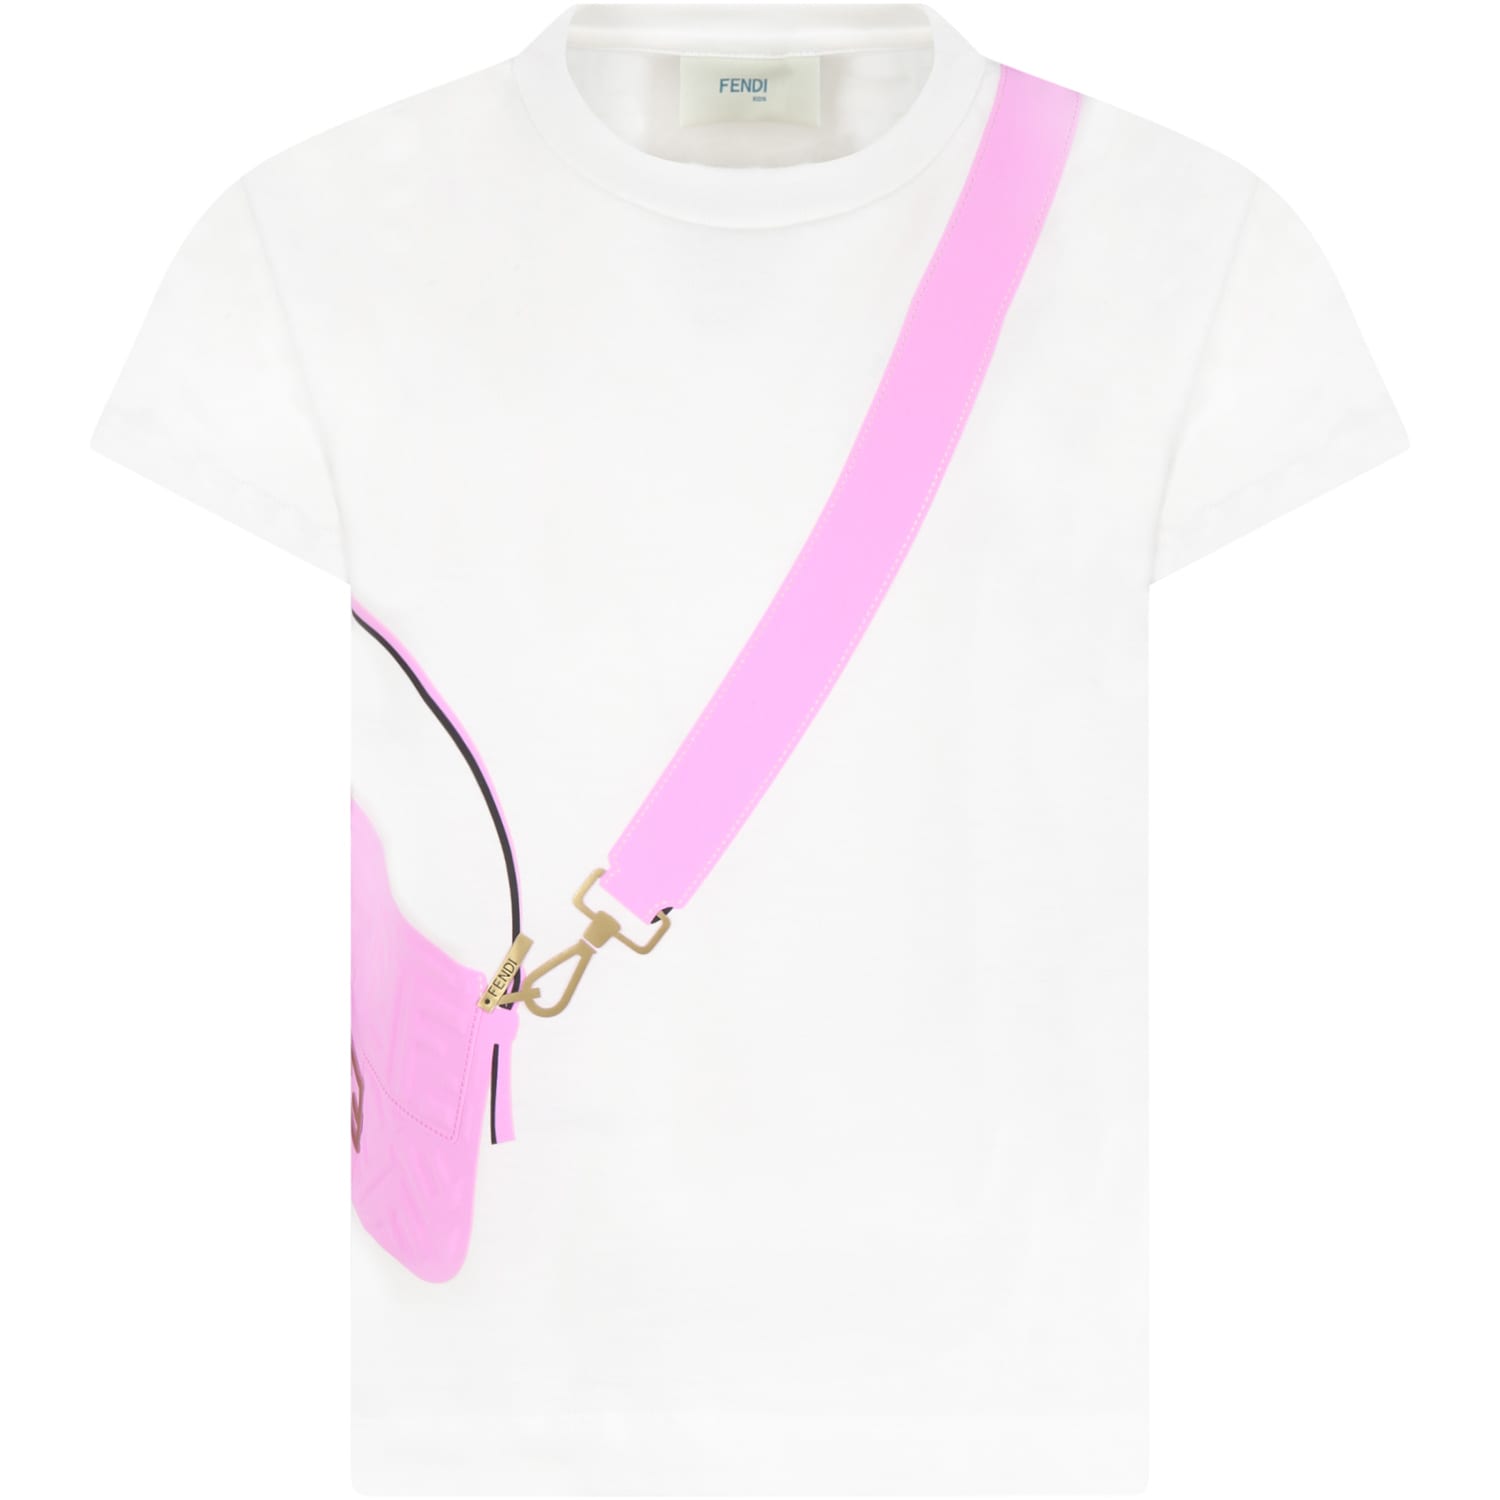 Fendi White T-shirt For Girl With Purple Bag